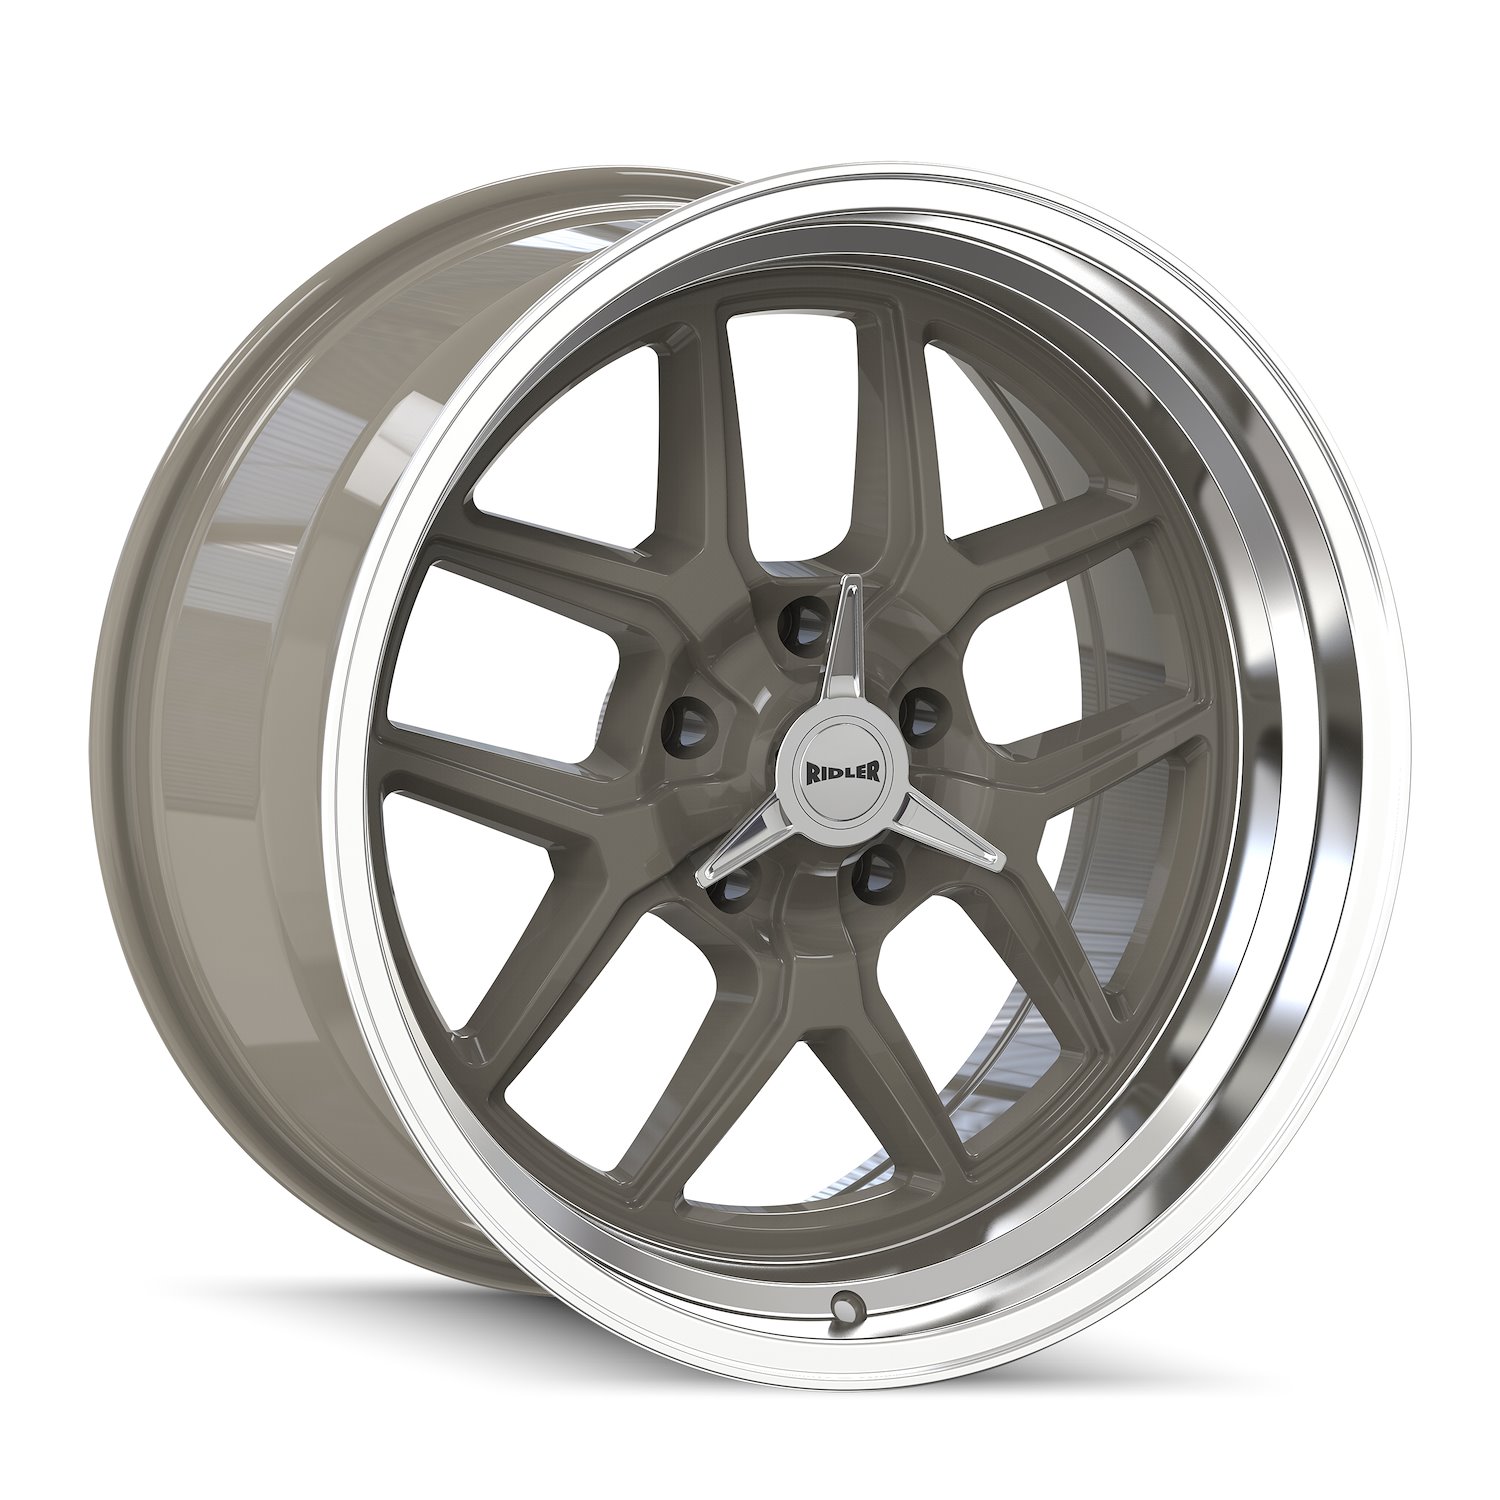 610-2861G 610-Series Wheel [Size: 20" x 8.50"] Gloss Grey Polished Finish